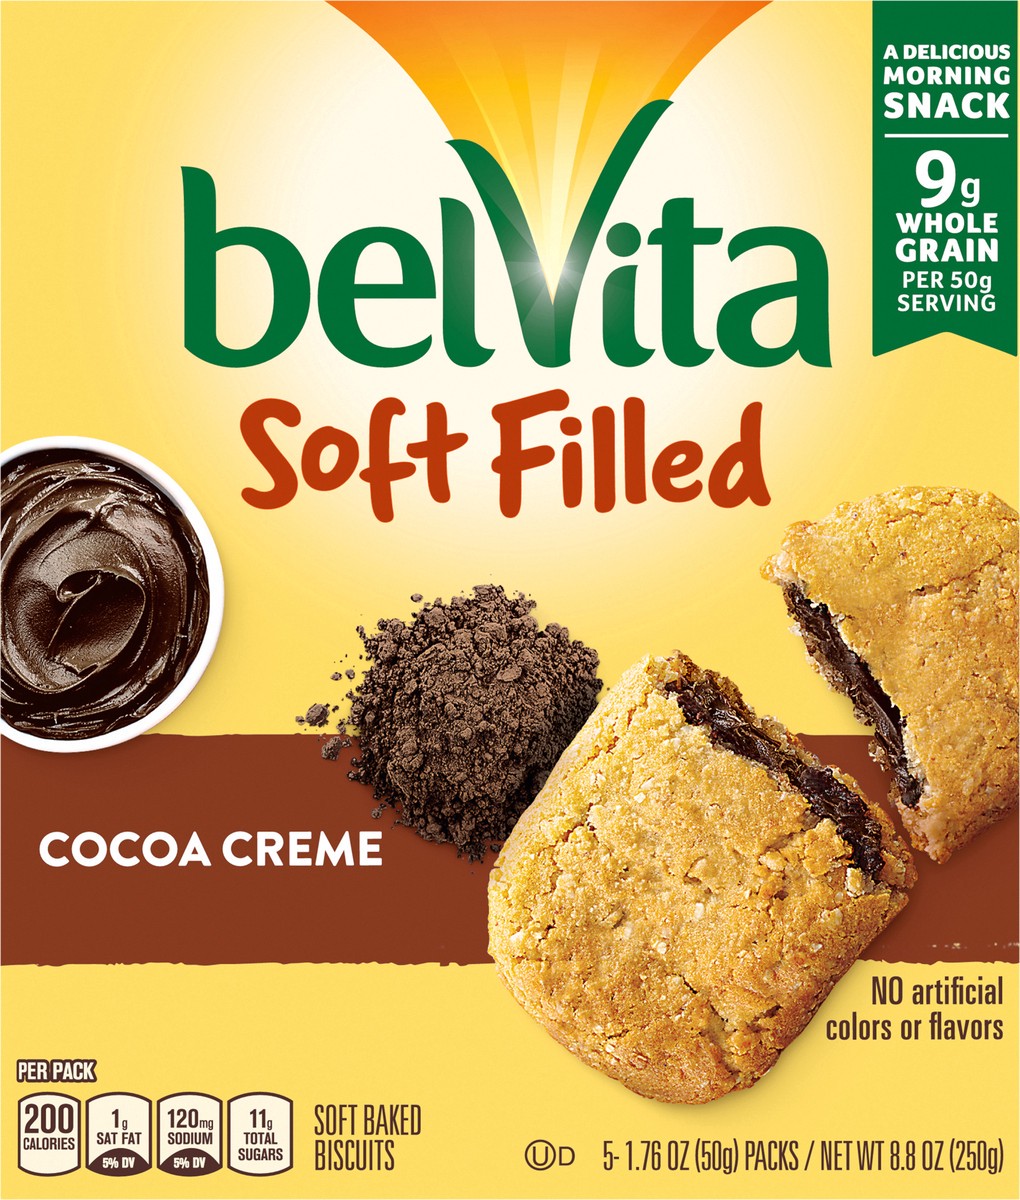 slide 6 of 9, belVita Nabisco belVita Belvita Soft Filled Cocoa Creme Soft Baked Biscuits 5-1.76 Oz. Packs, 8.8 oz